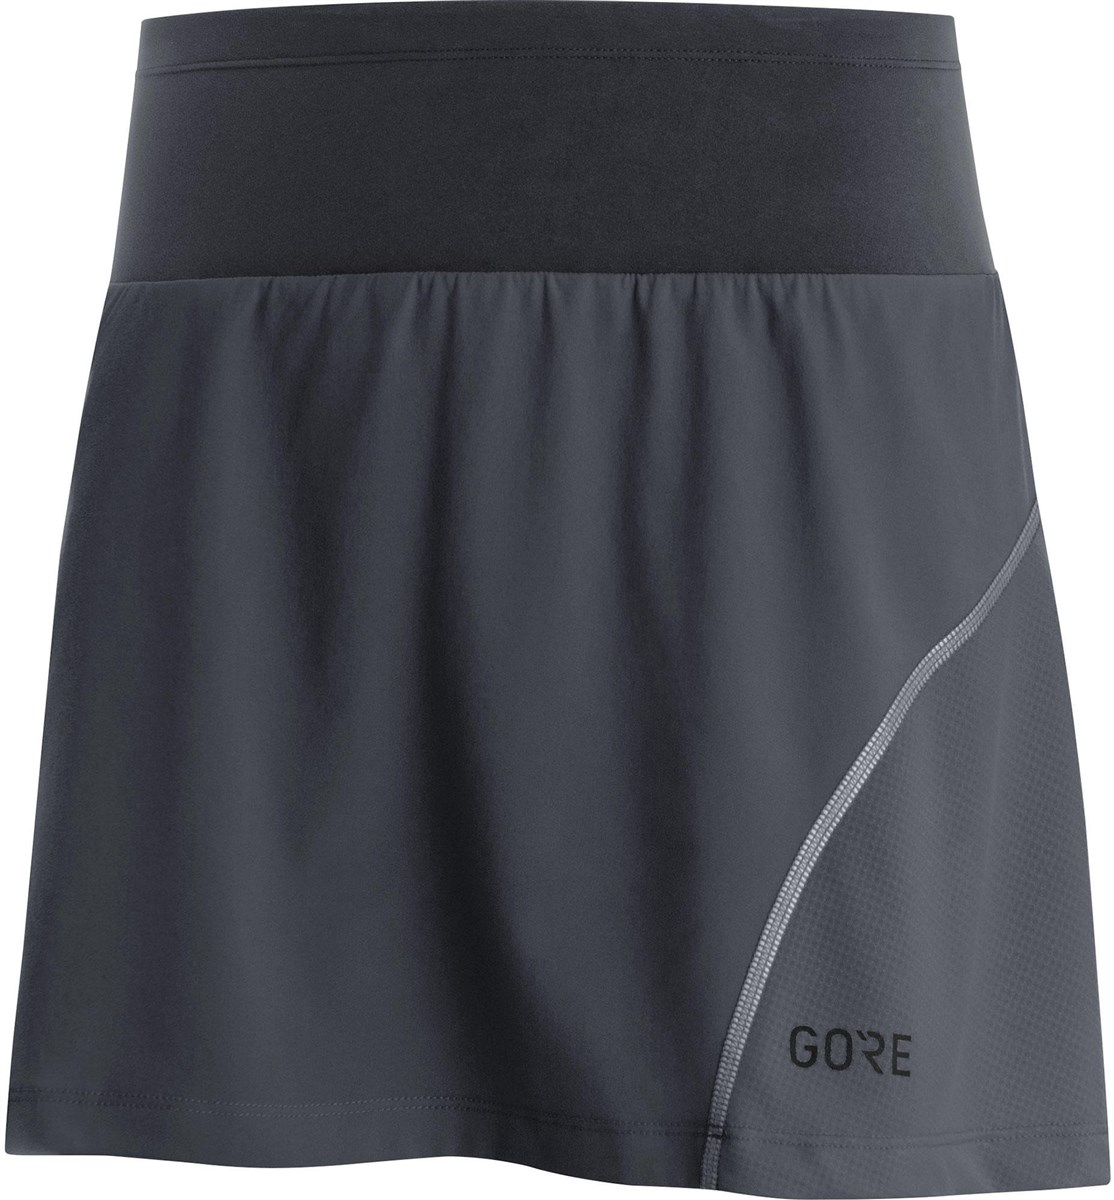 Gore R7 Womens Skort product image